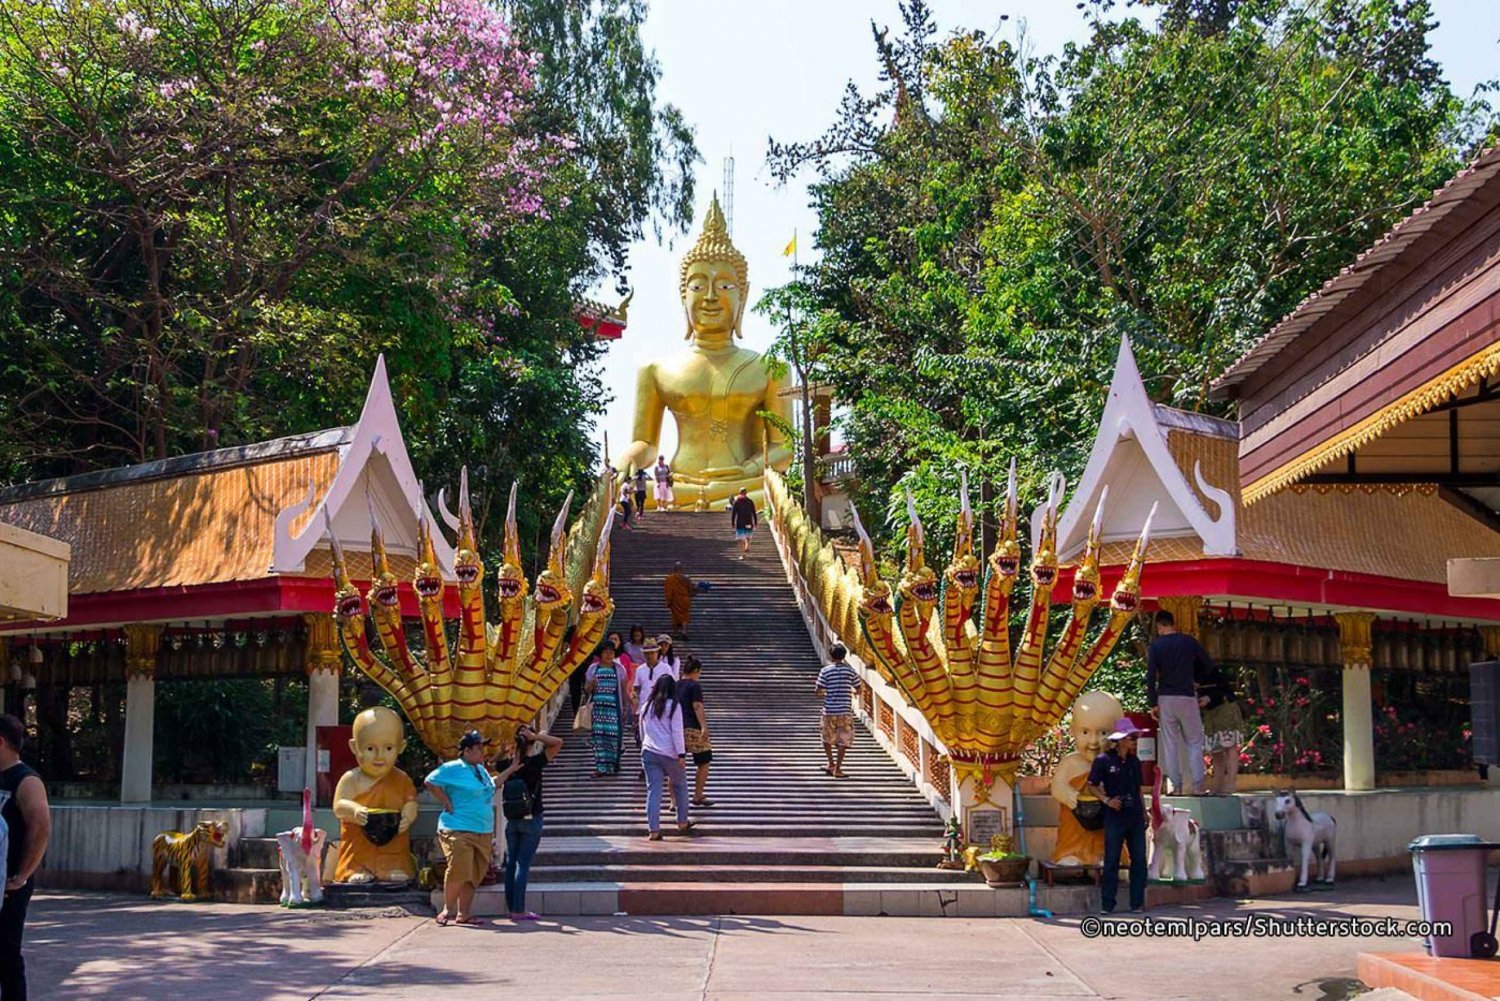 Pattaya: Essência do clássico Pattaya City Tour